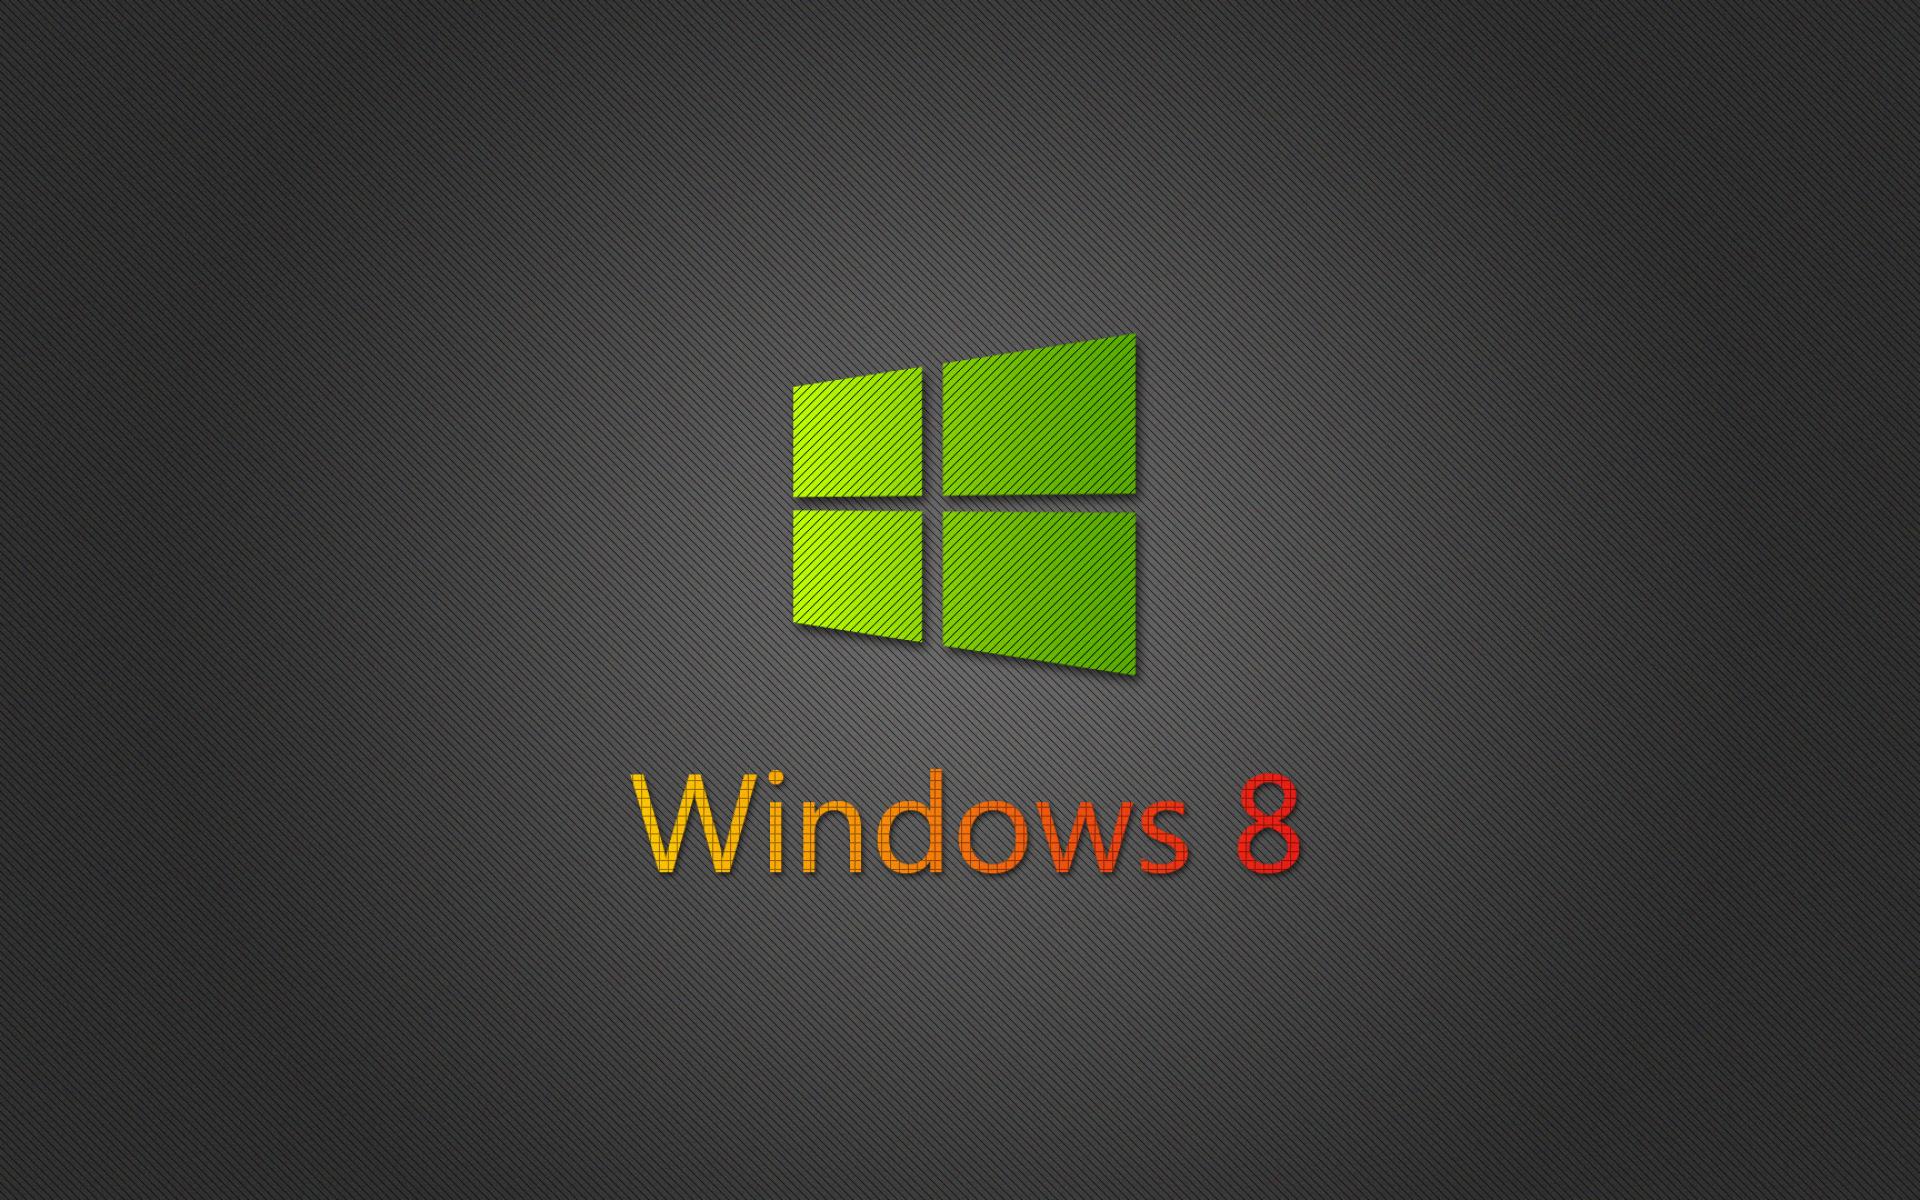 Windows 8 Wallpaper Gallery #dqj0jvsgkn - Rolasan.net